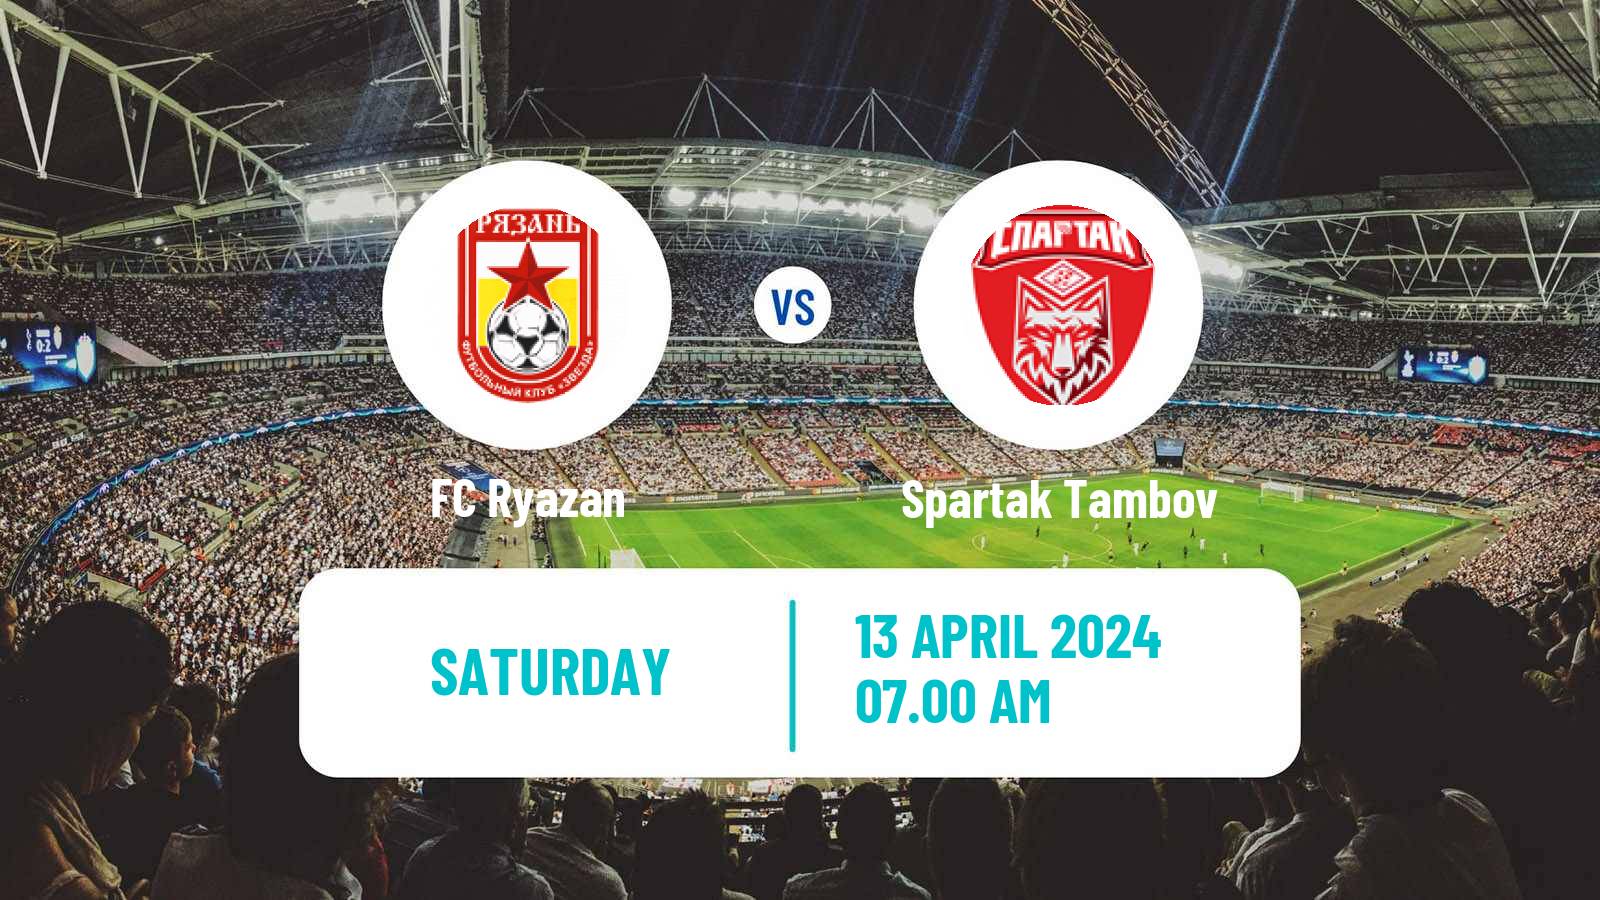 Soccer FNL 2 Division B Group 3 Ryazan - Spartak Tambov